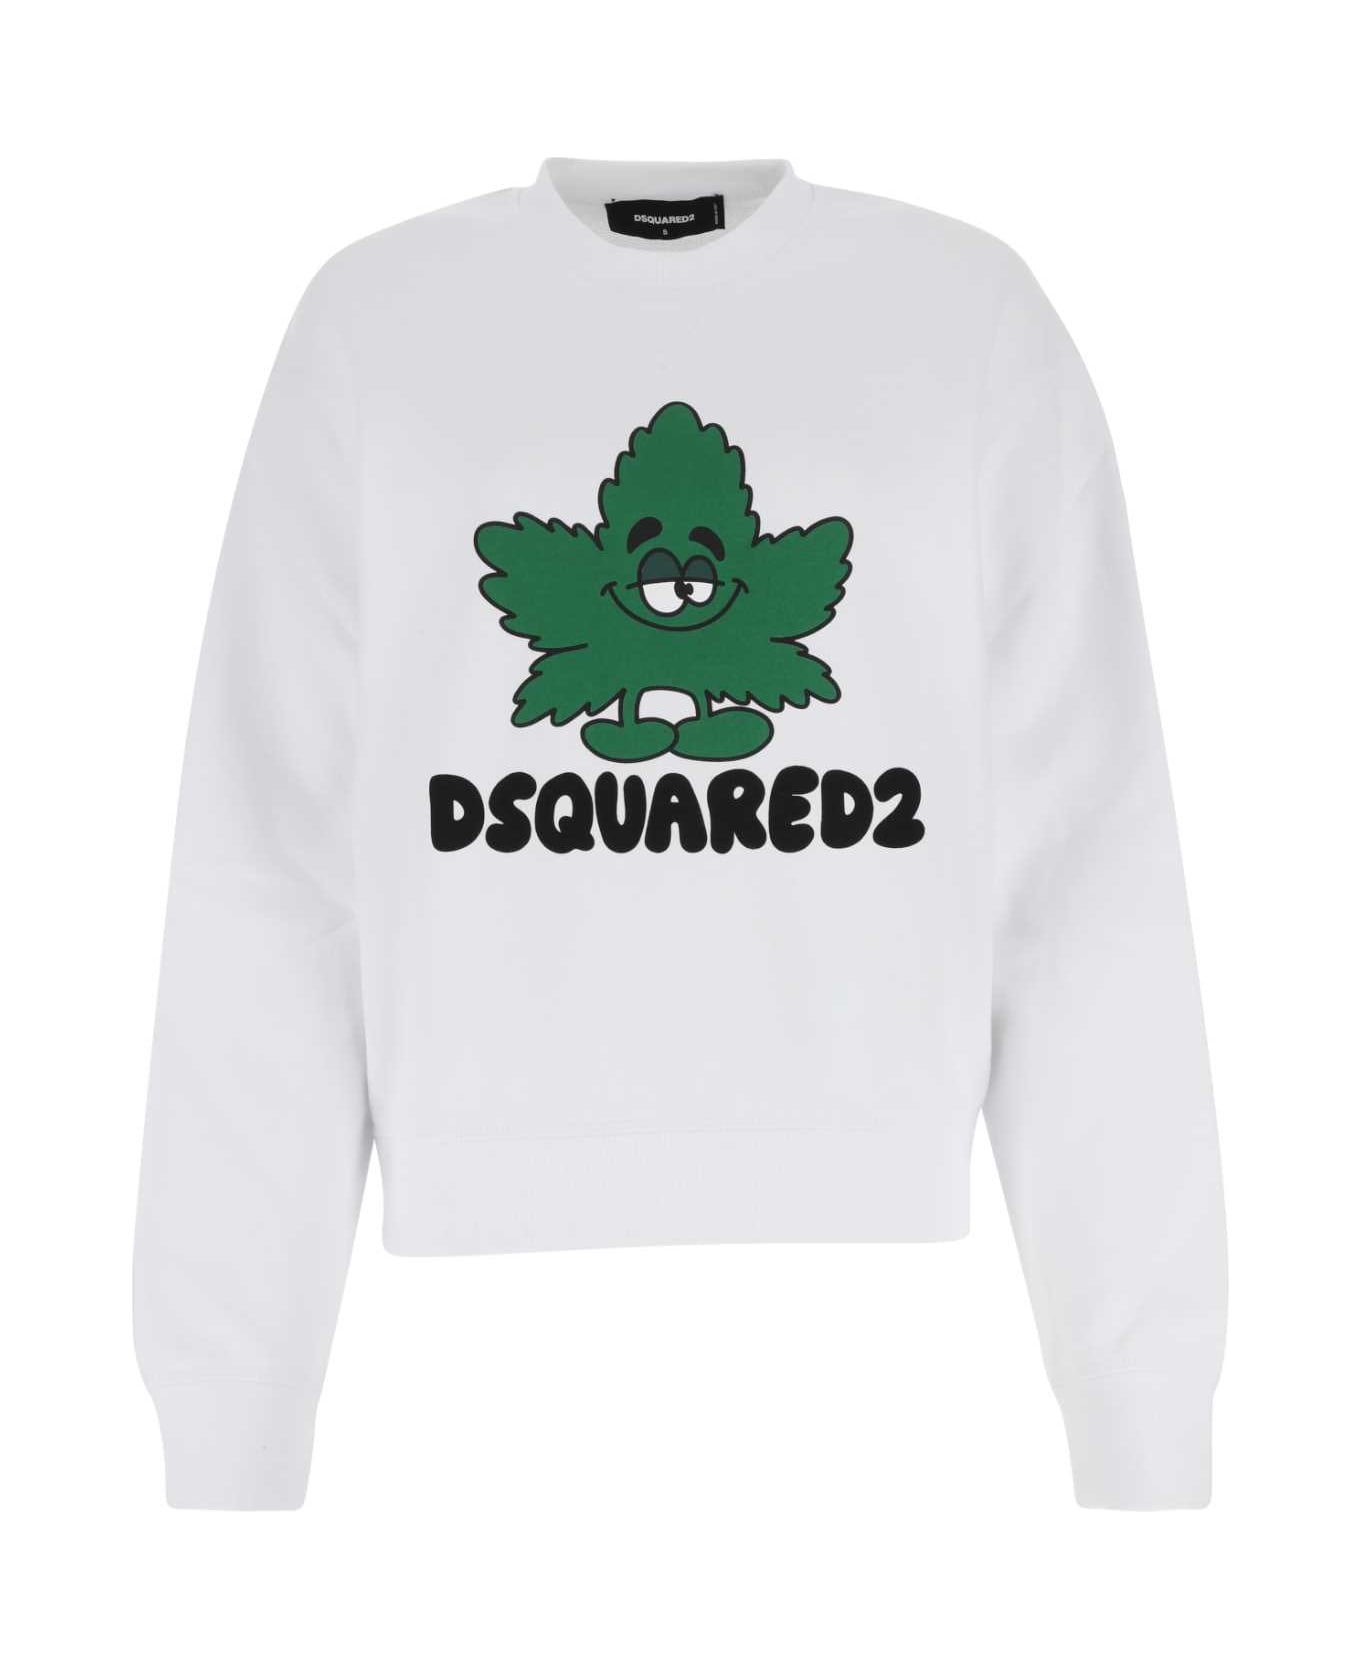 Dsquared2 White Cotton Sweatshirt - White